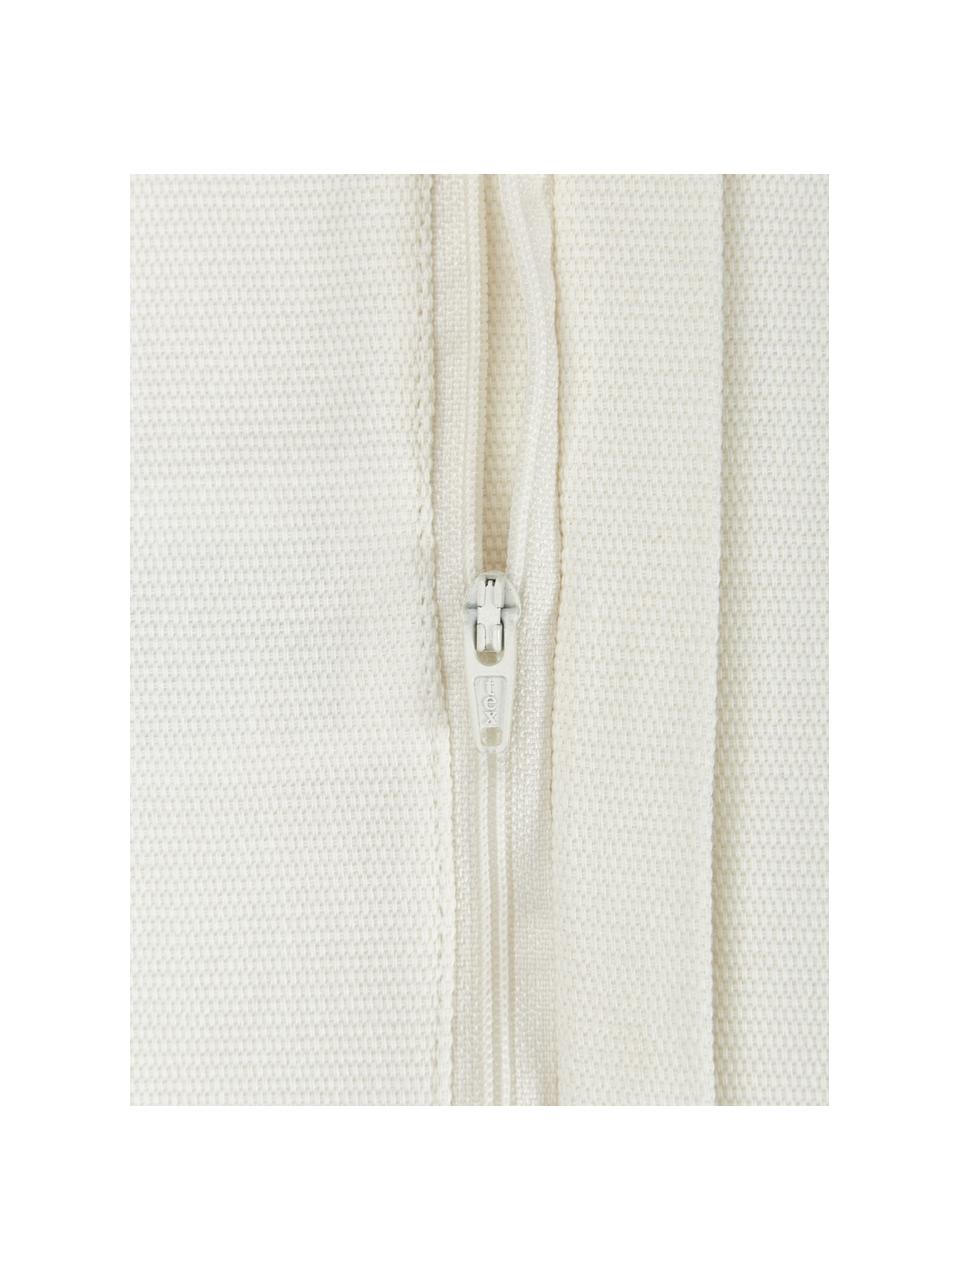 Federa arredo in cotone bianco crema Mads, 100% cotone, Beige, Larg. 40 x Lung. 40 cm